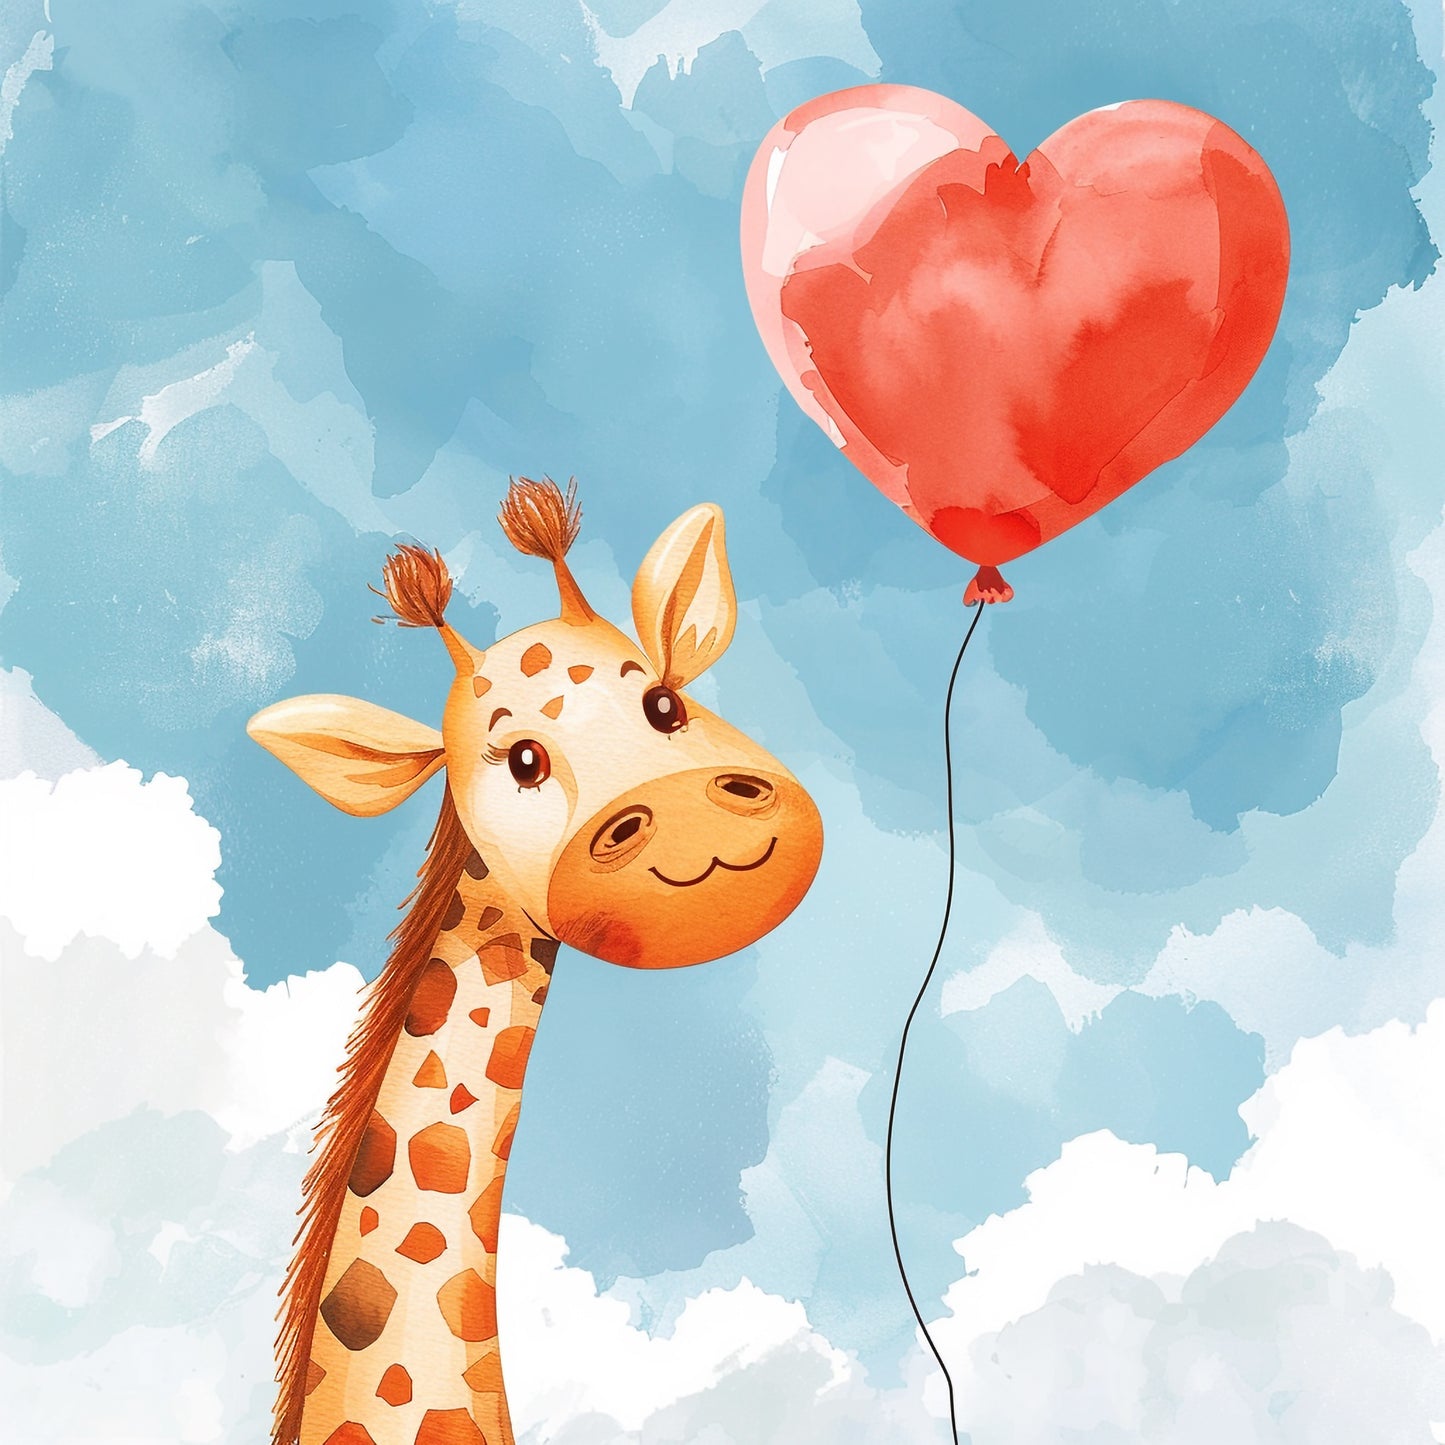 Adorable Baby Giraffe with Heart-Shaped Balloon Illustration